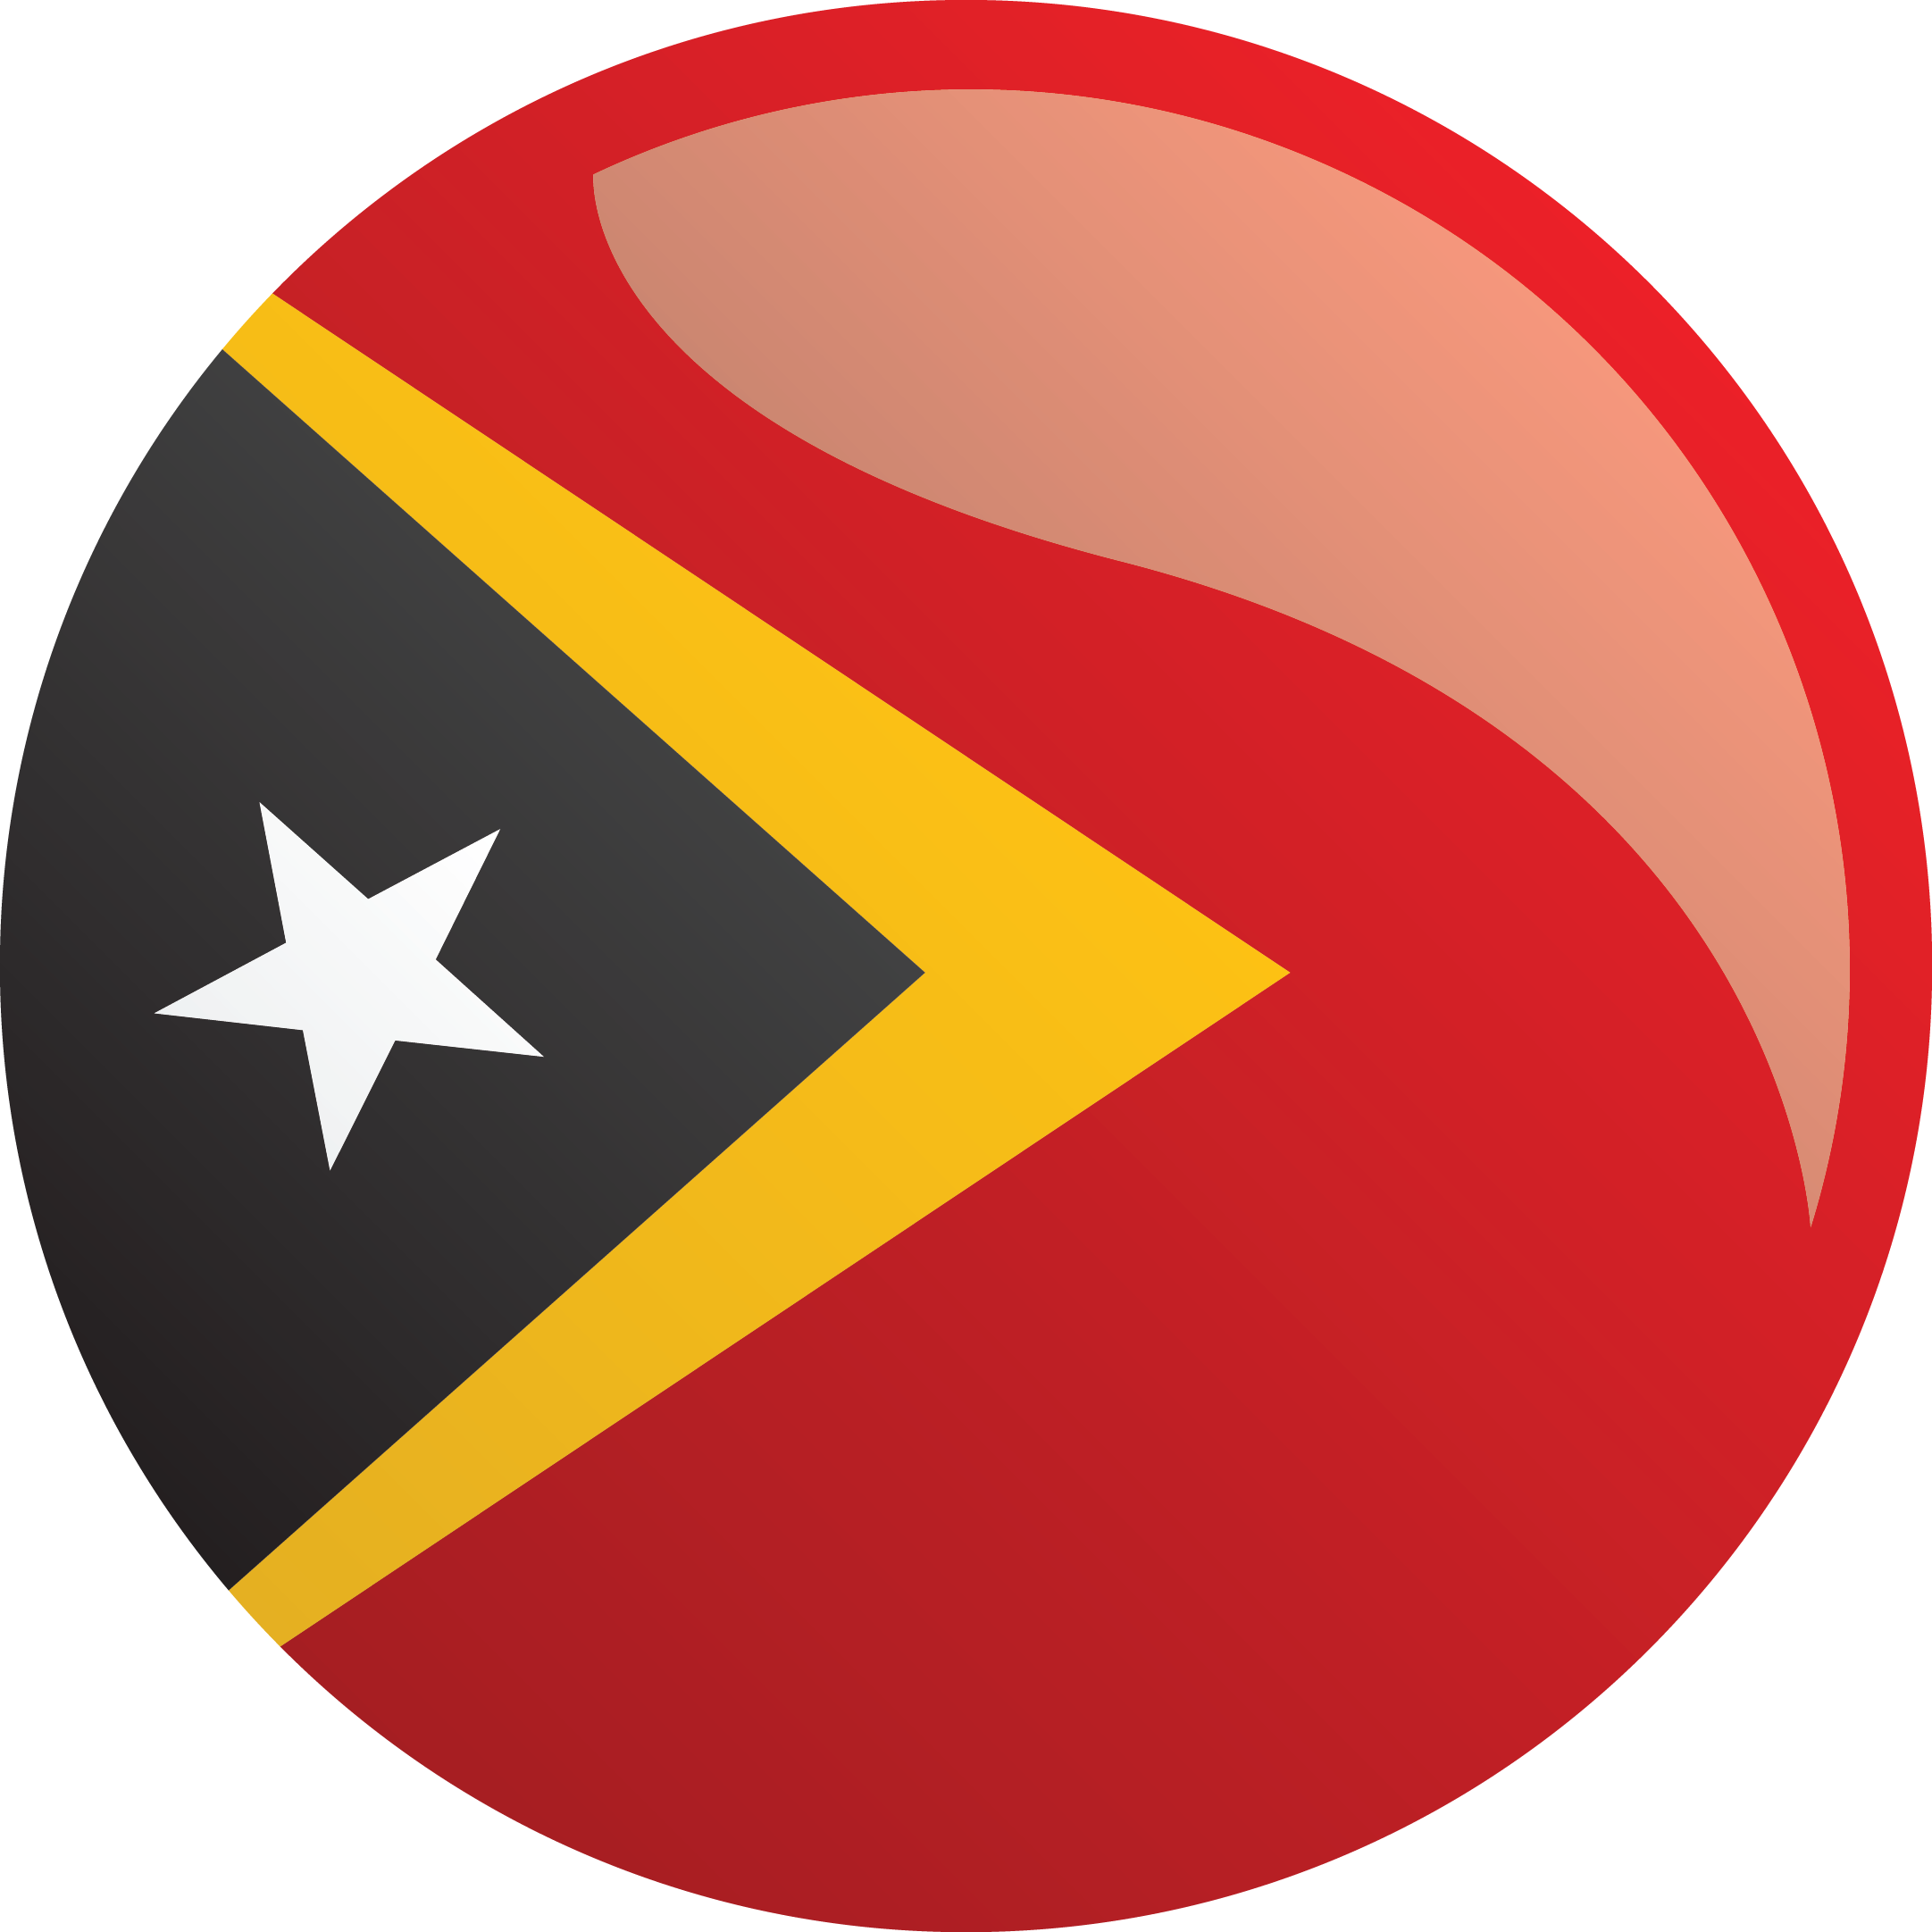 Timor-Leste Flag PNG HD Quality